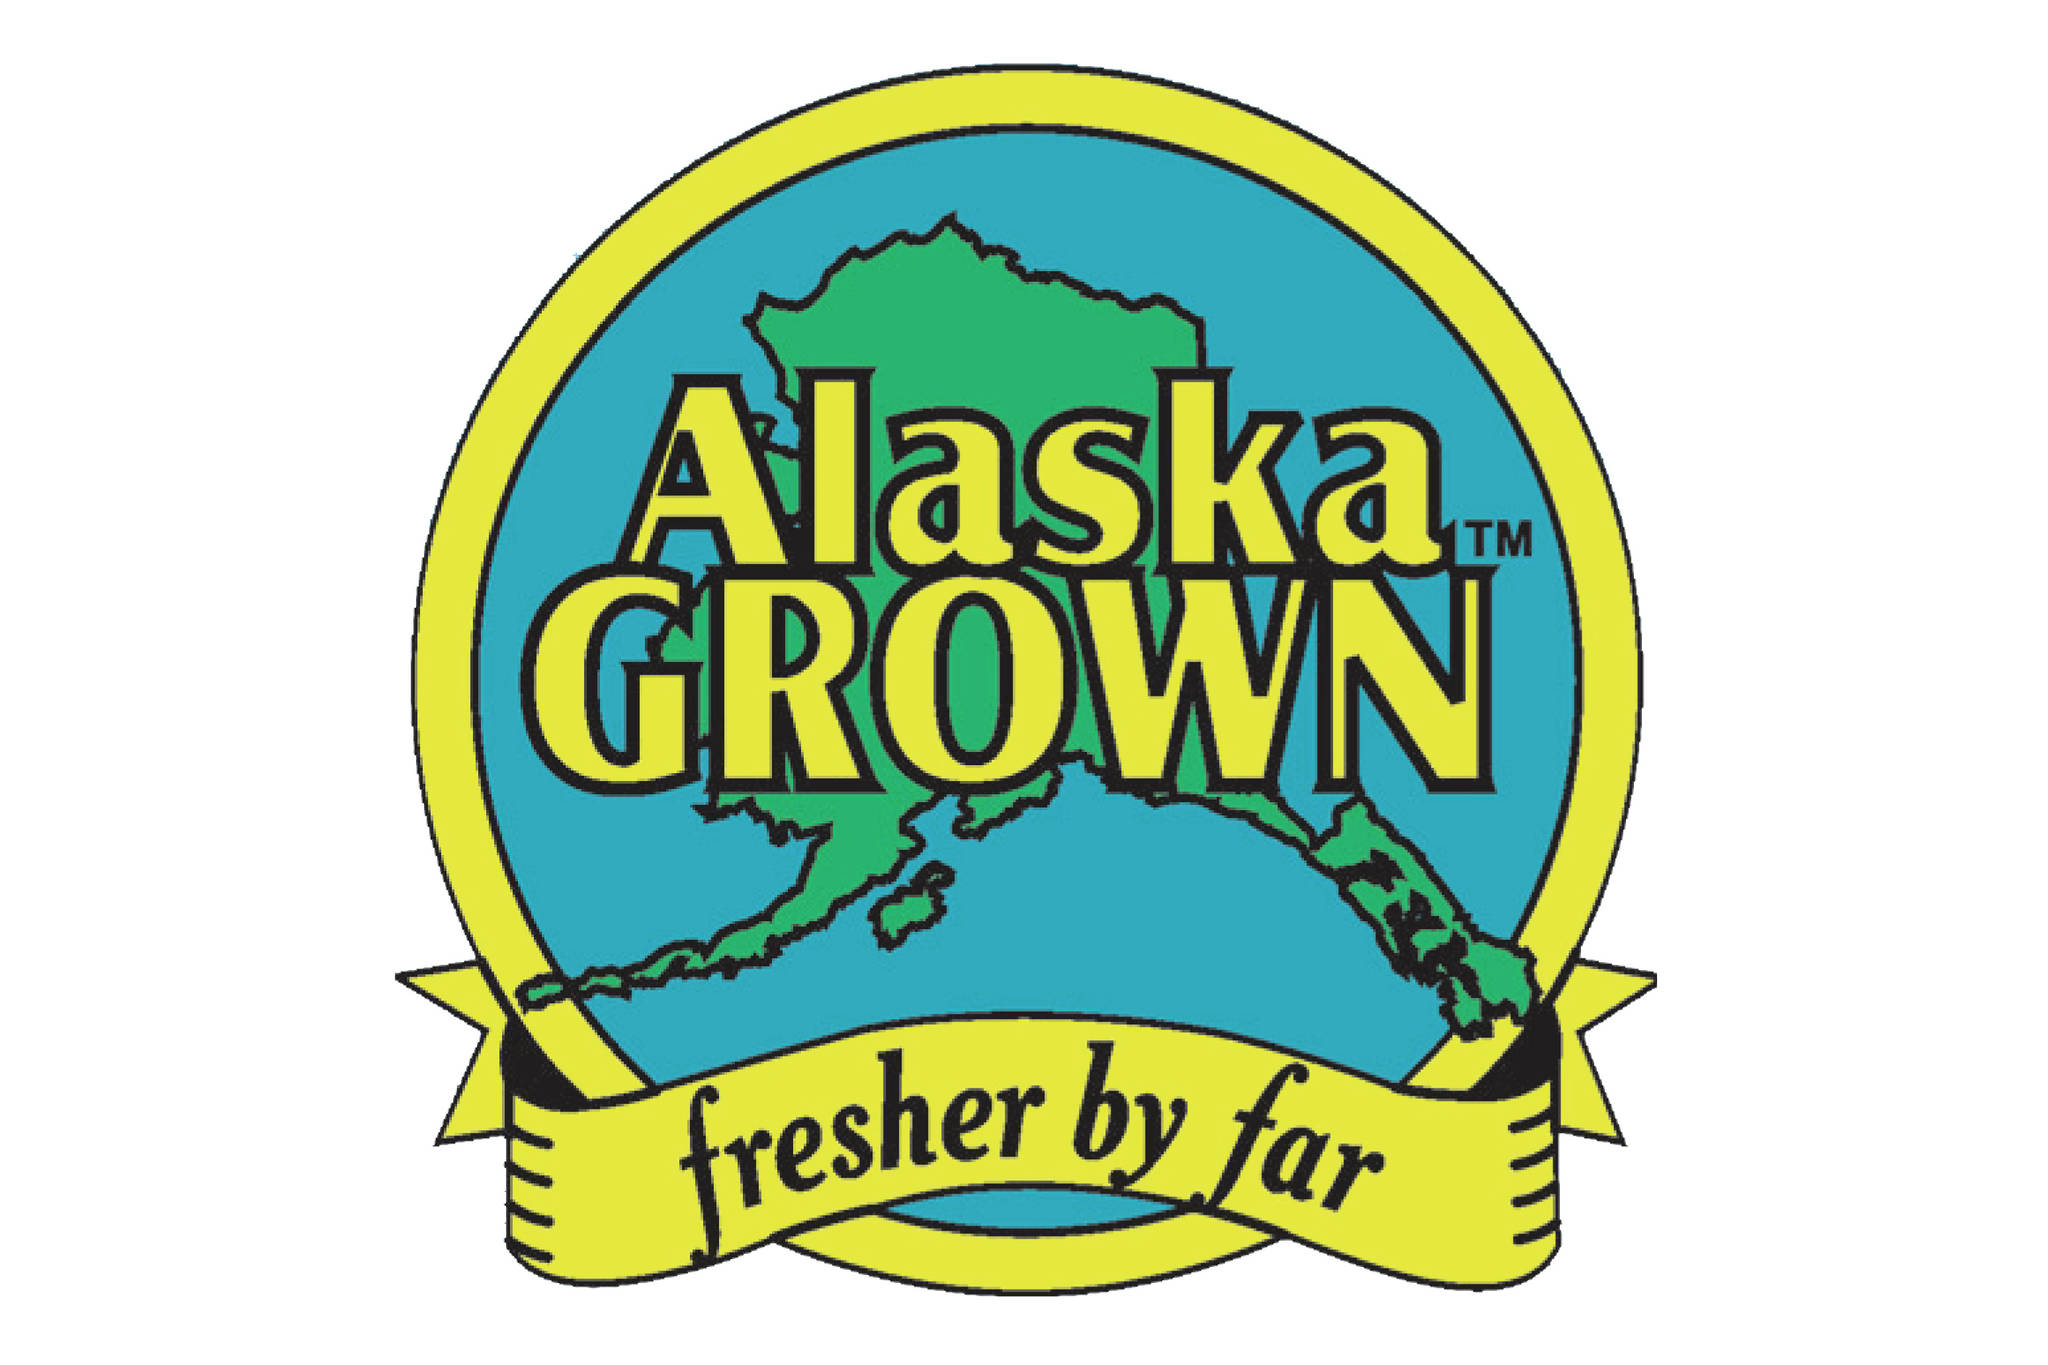 The Alaska Grown logo.